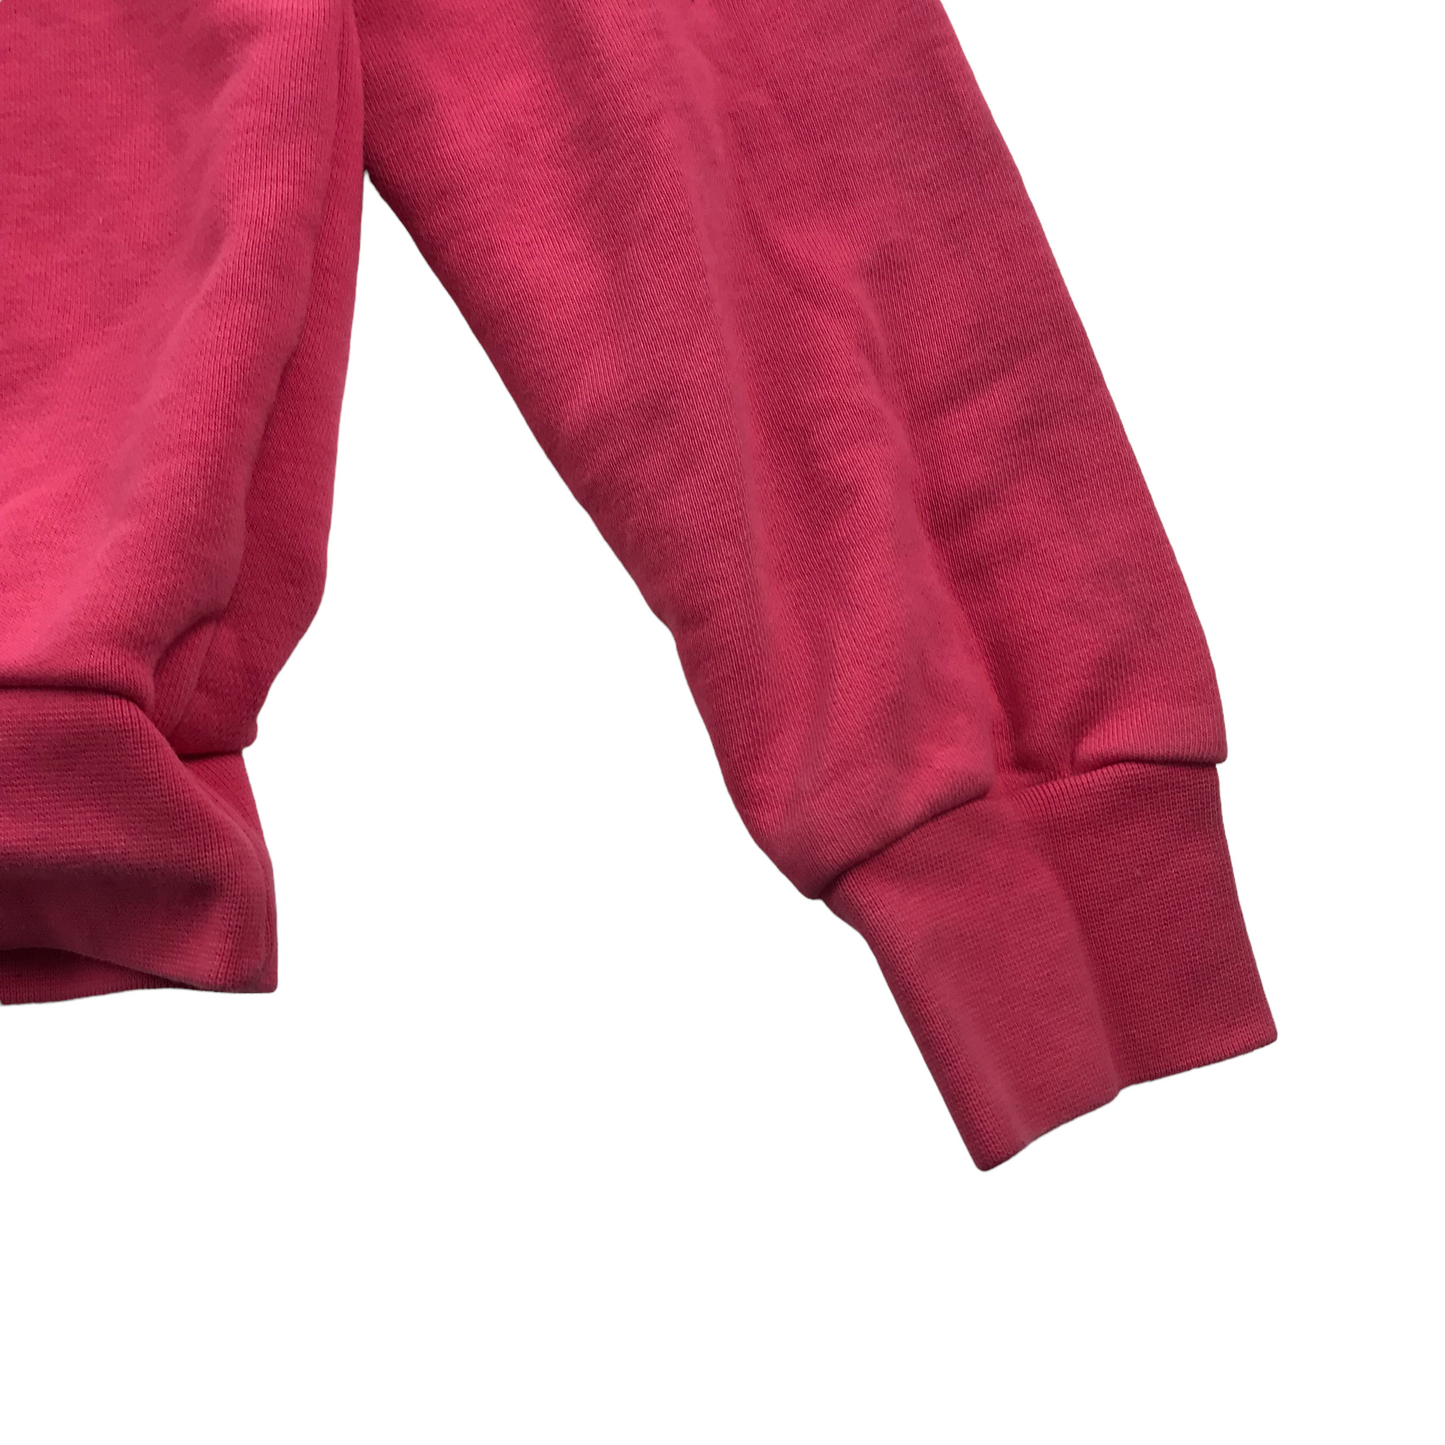 Adidas Pink Logo Print Sweater Jumper Age 12